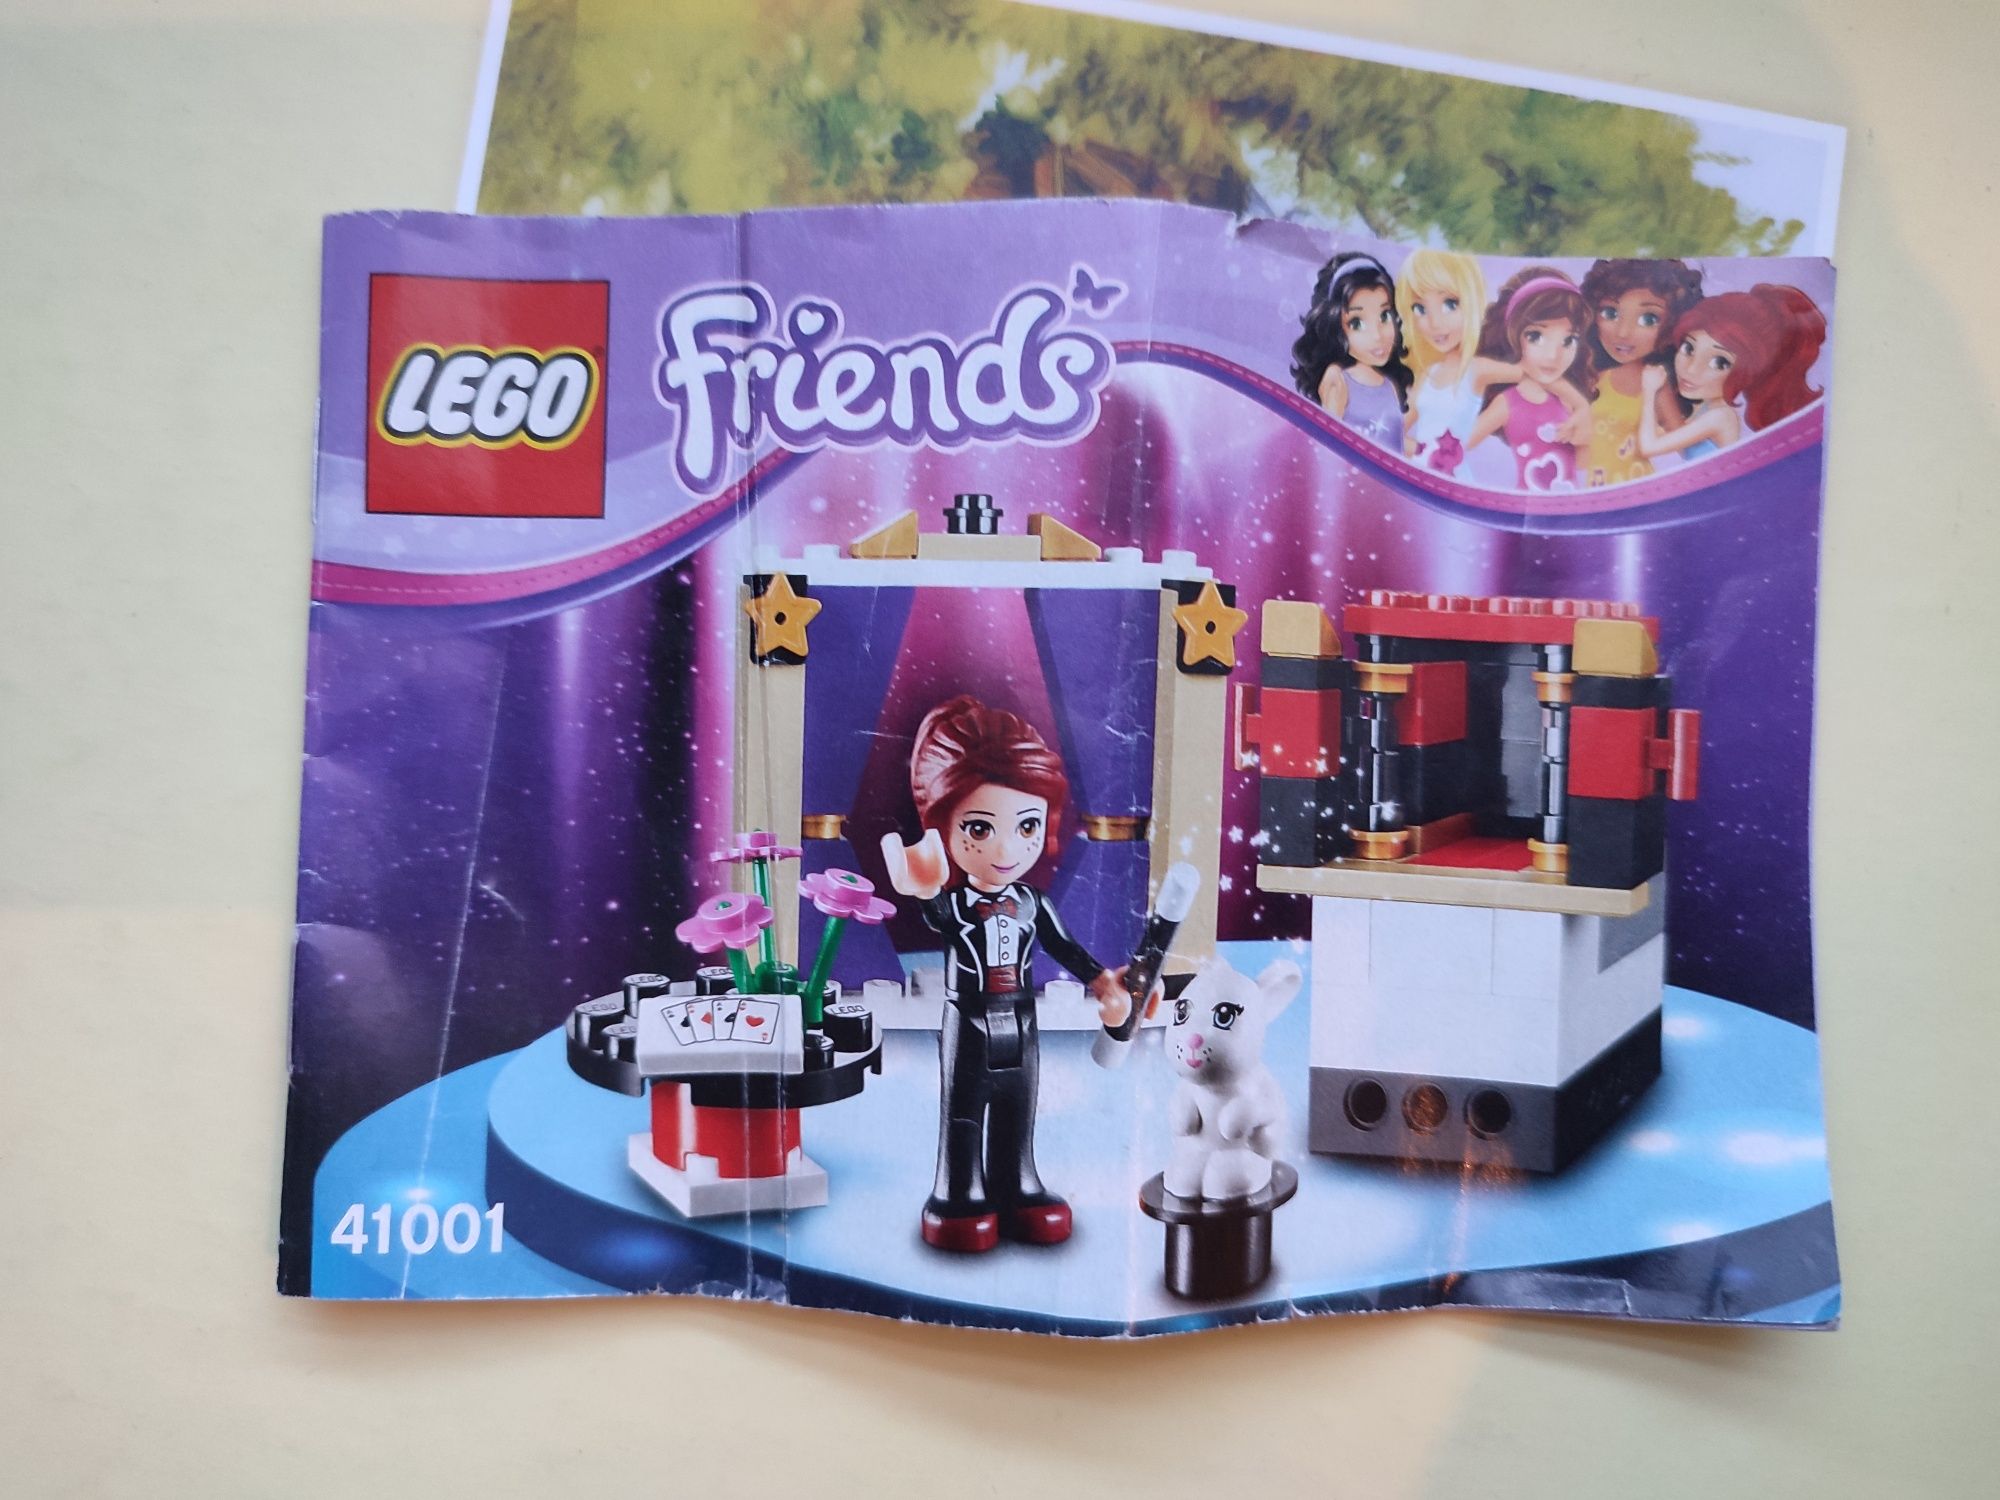 LEGO friends 41001